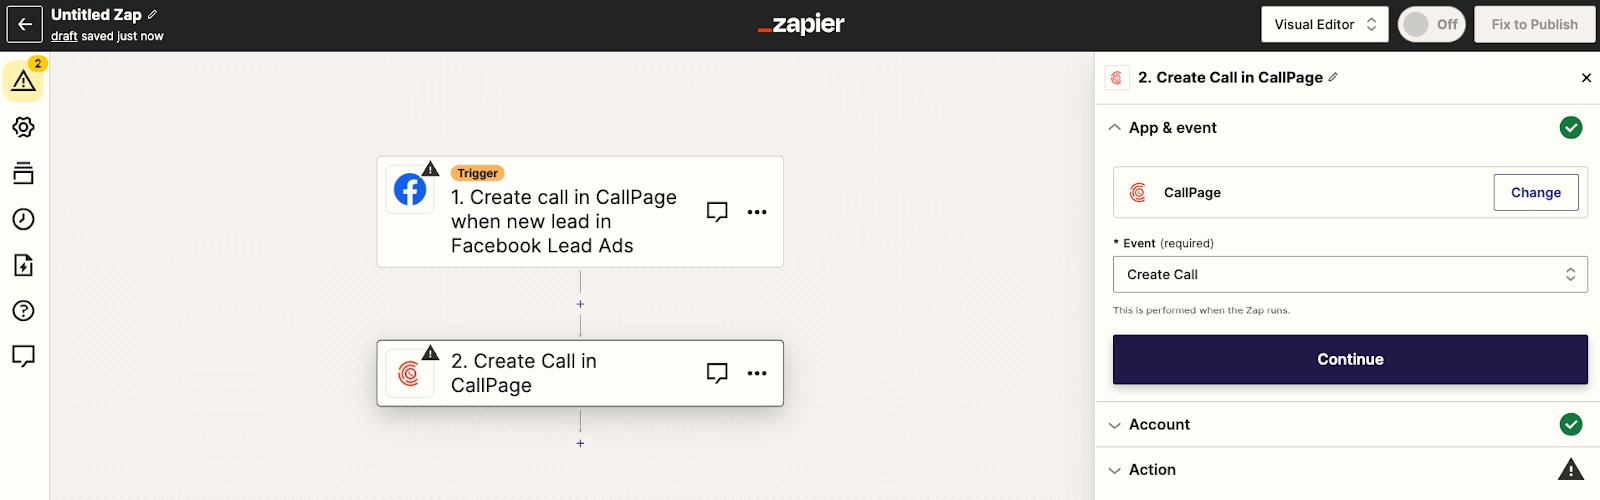 Integrating Facebook Ads with CallPage through Zapier